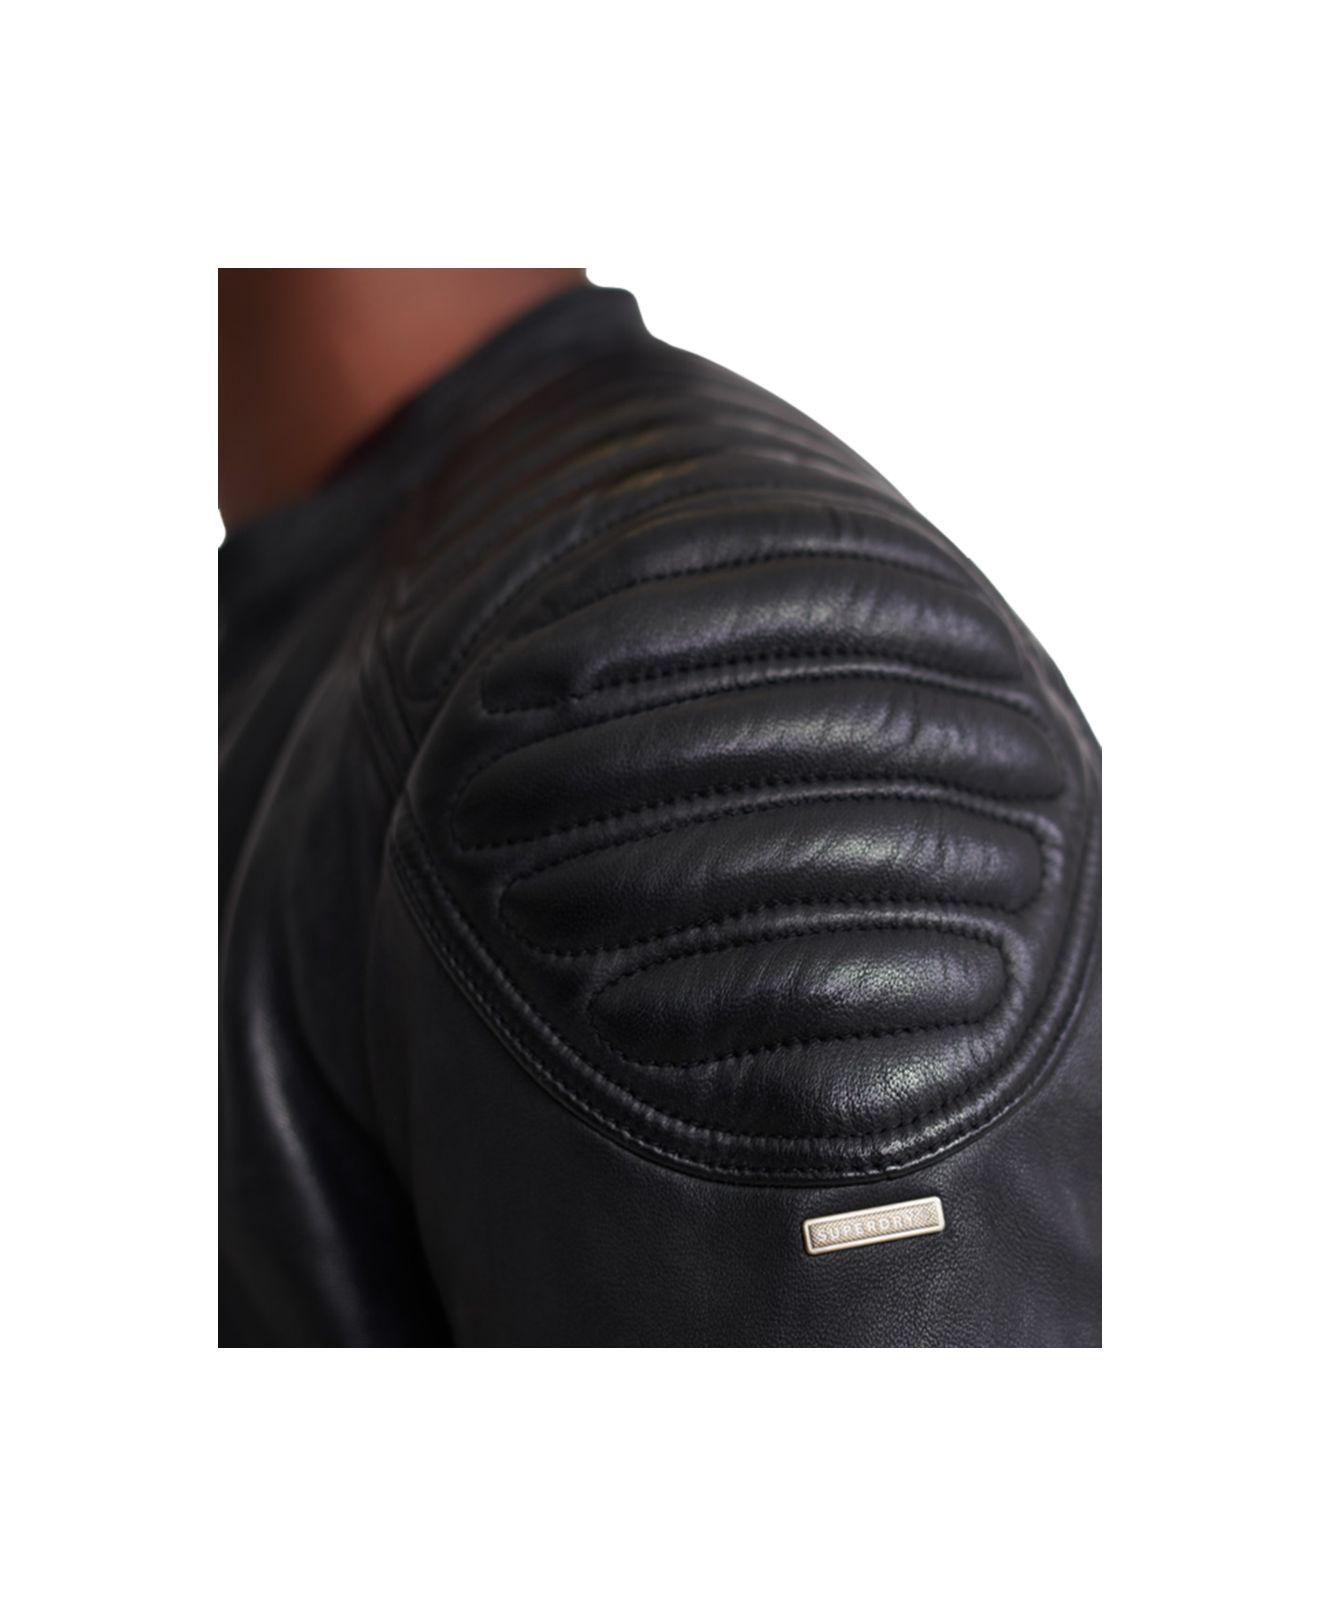 Superdry City Hero Leather Racer Jacket in Black for Men - Save 31% | Lyst